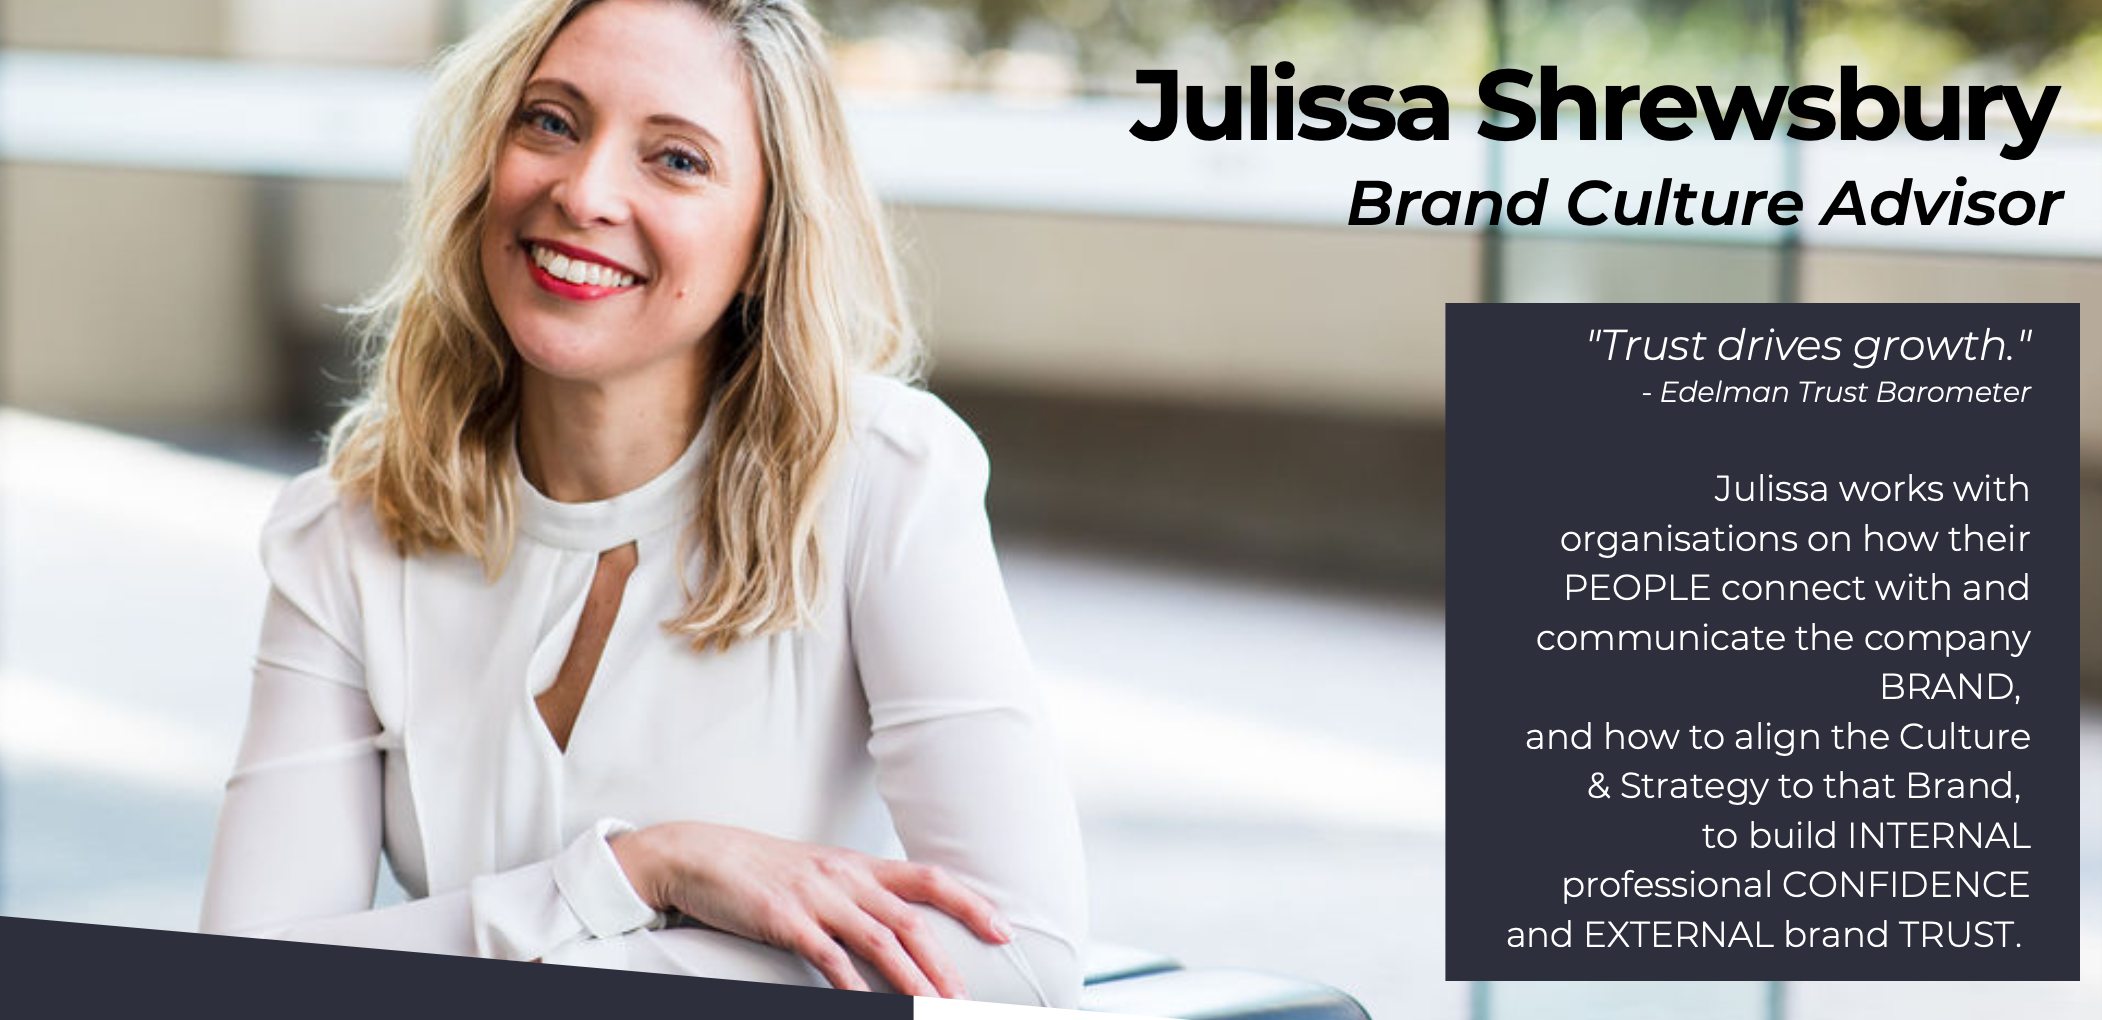 Brand Culture Advisor Julissa Shrewsbury